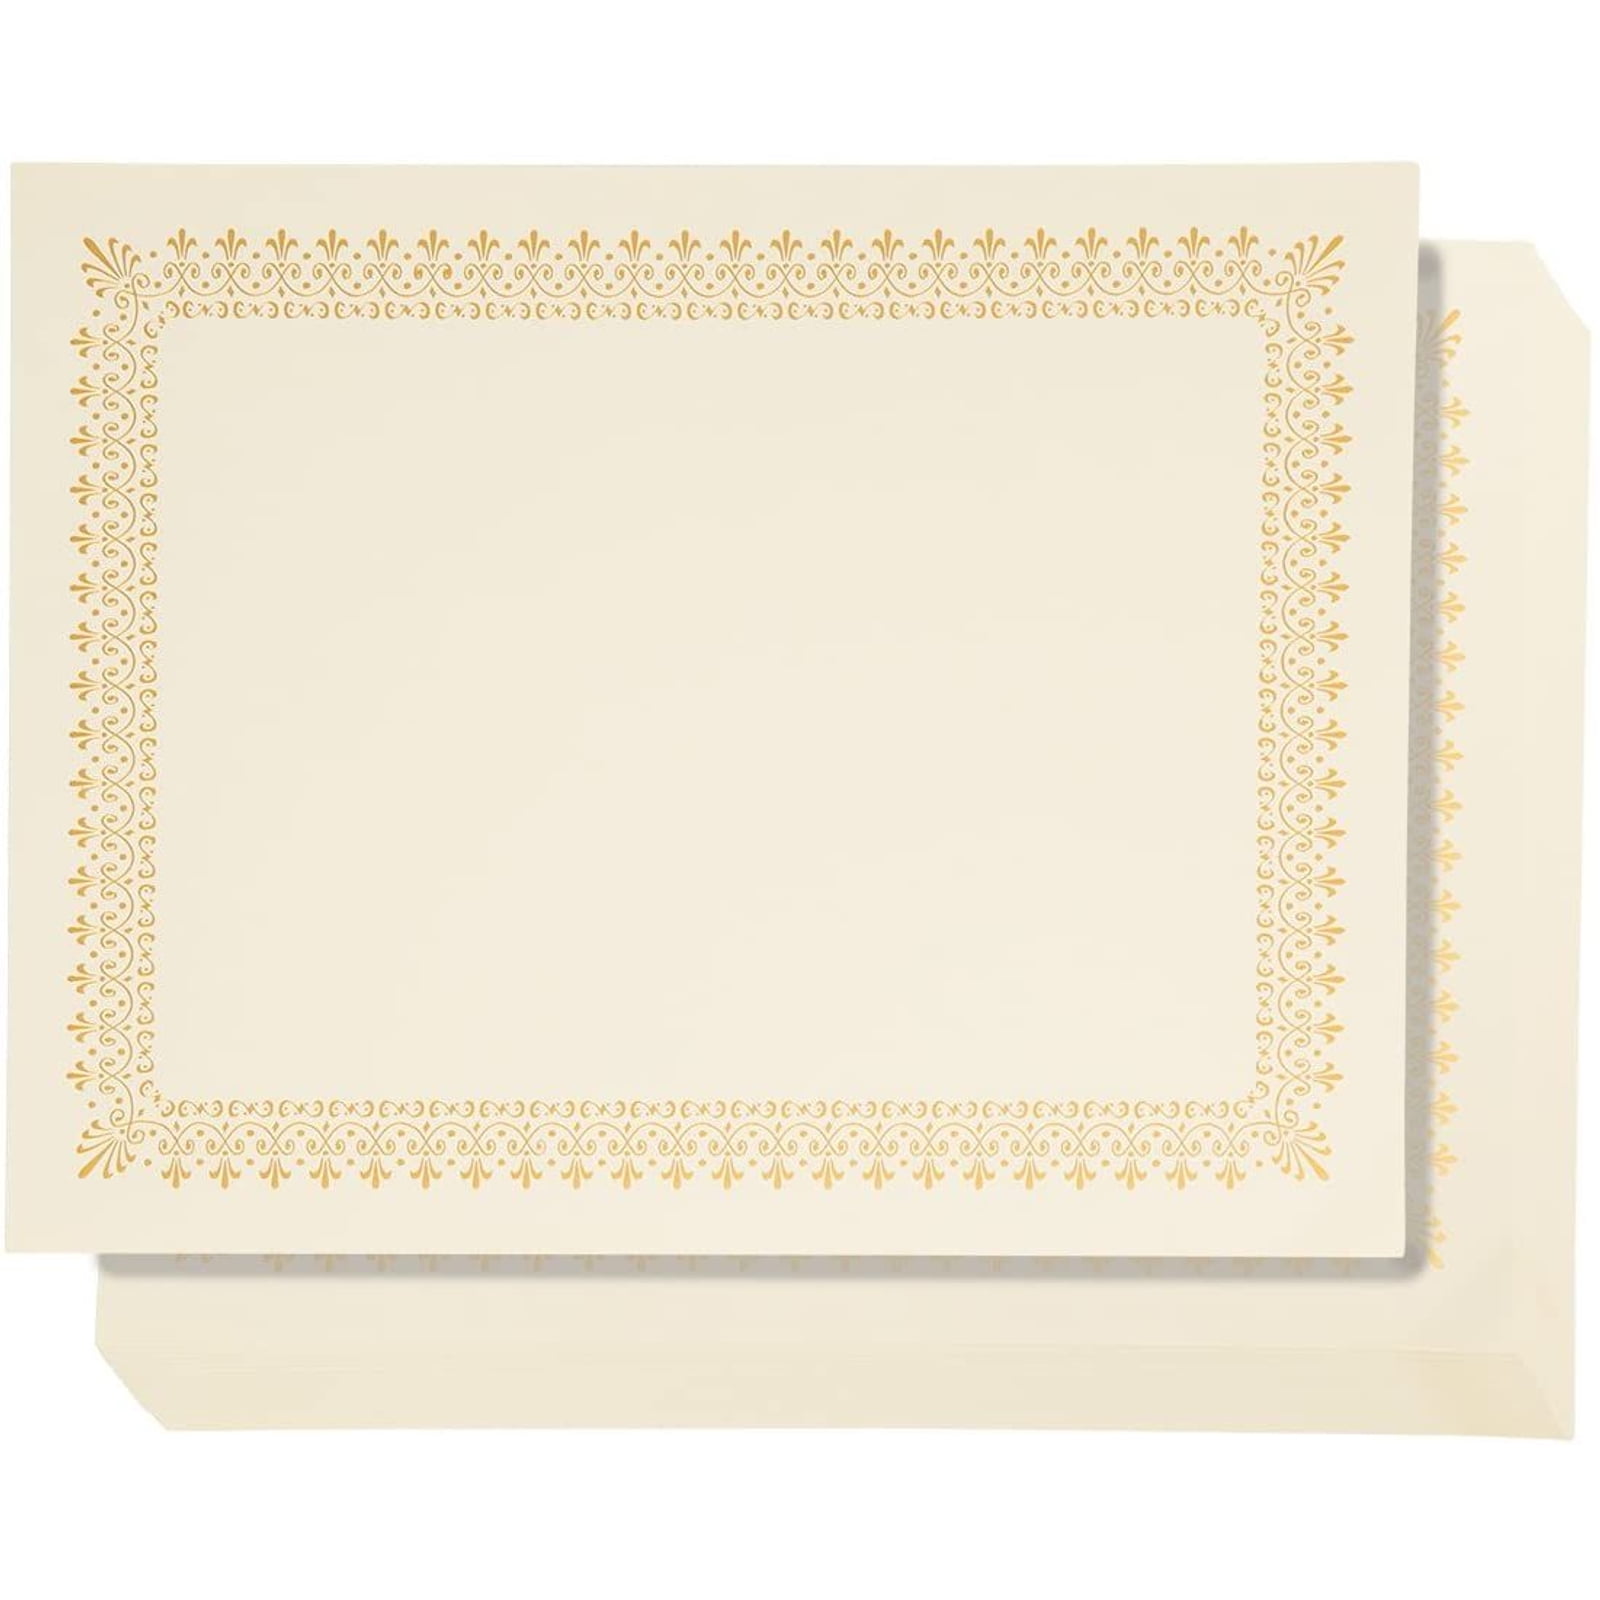 96 Pack Blank Certificate Award Printer Gold Paper Brown Borders 8.5" x 11" 